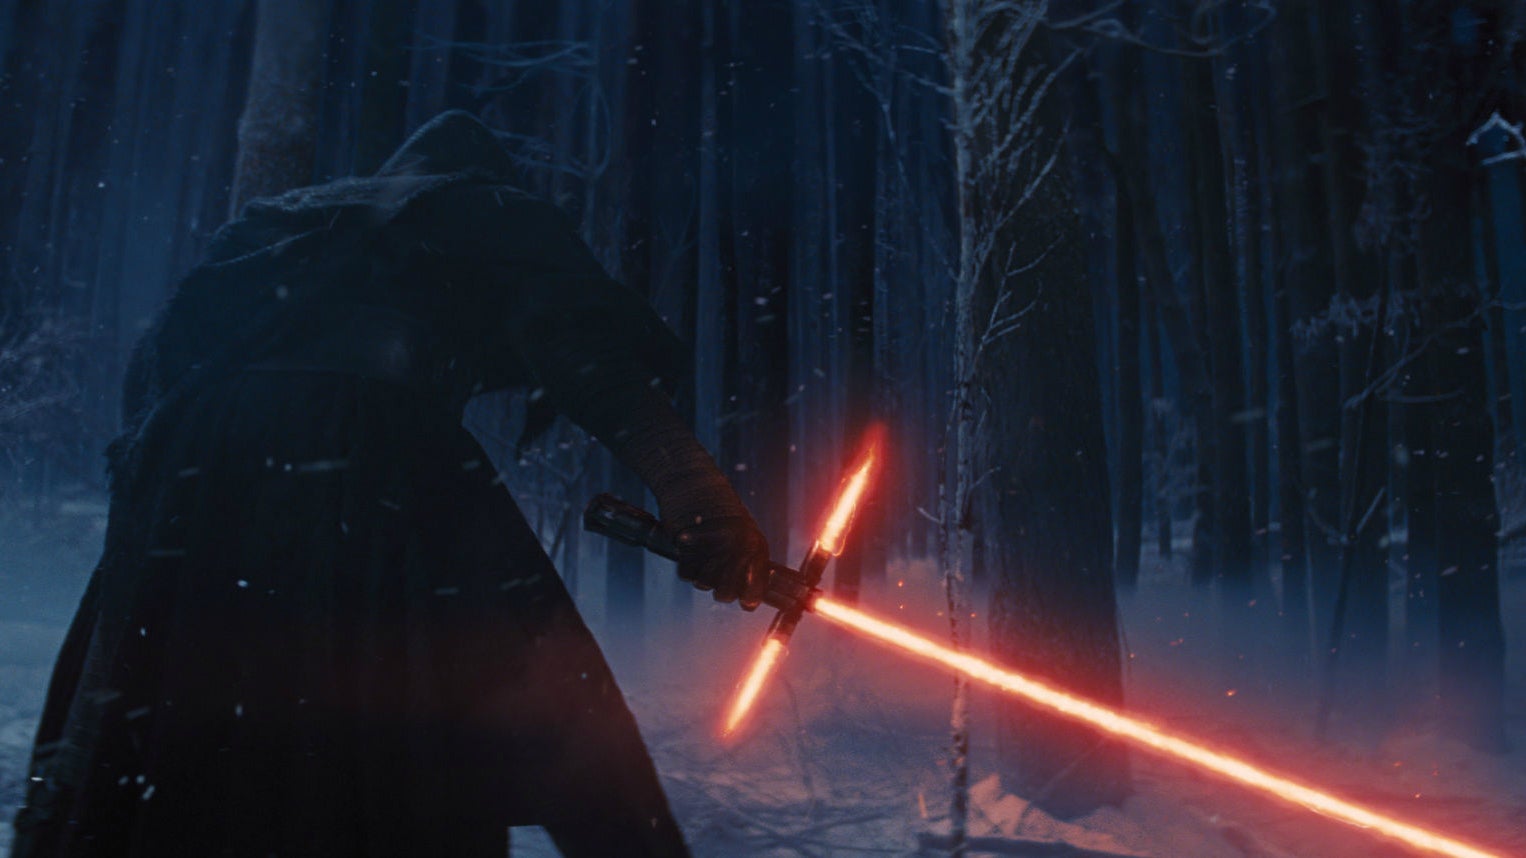 Kylo Ren ignites his lightsaber in Star Wars: The Force Awakens